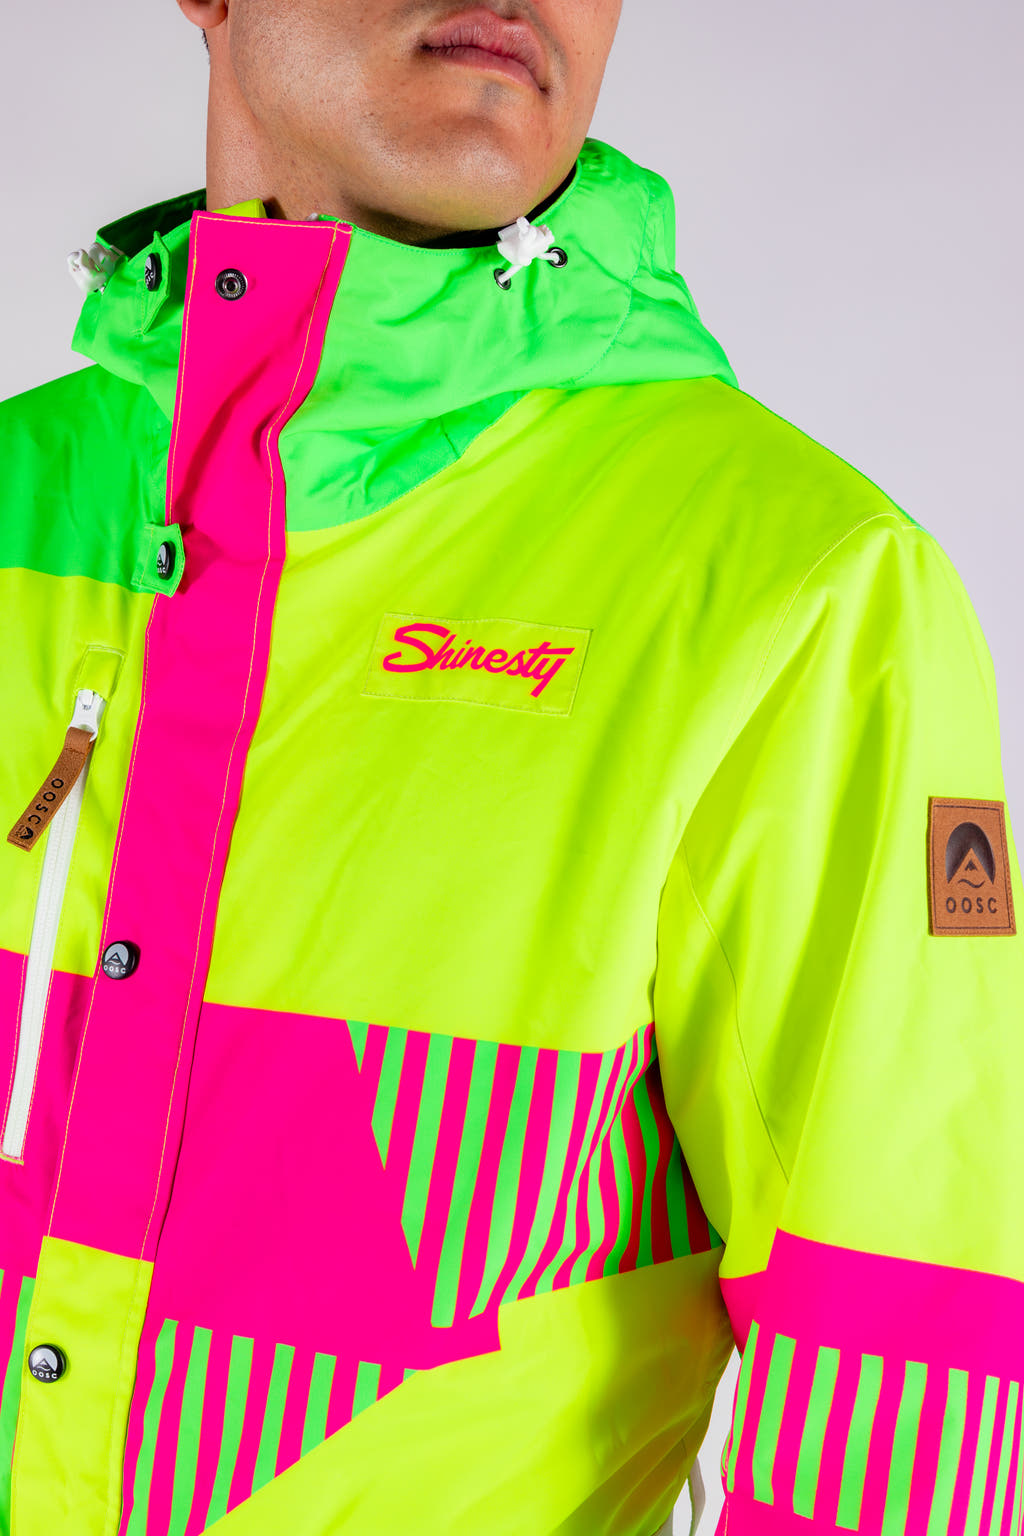 Retro ski onesie